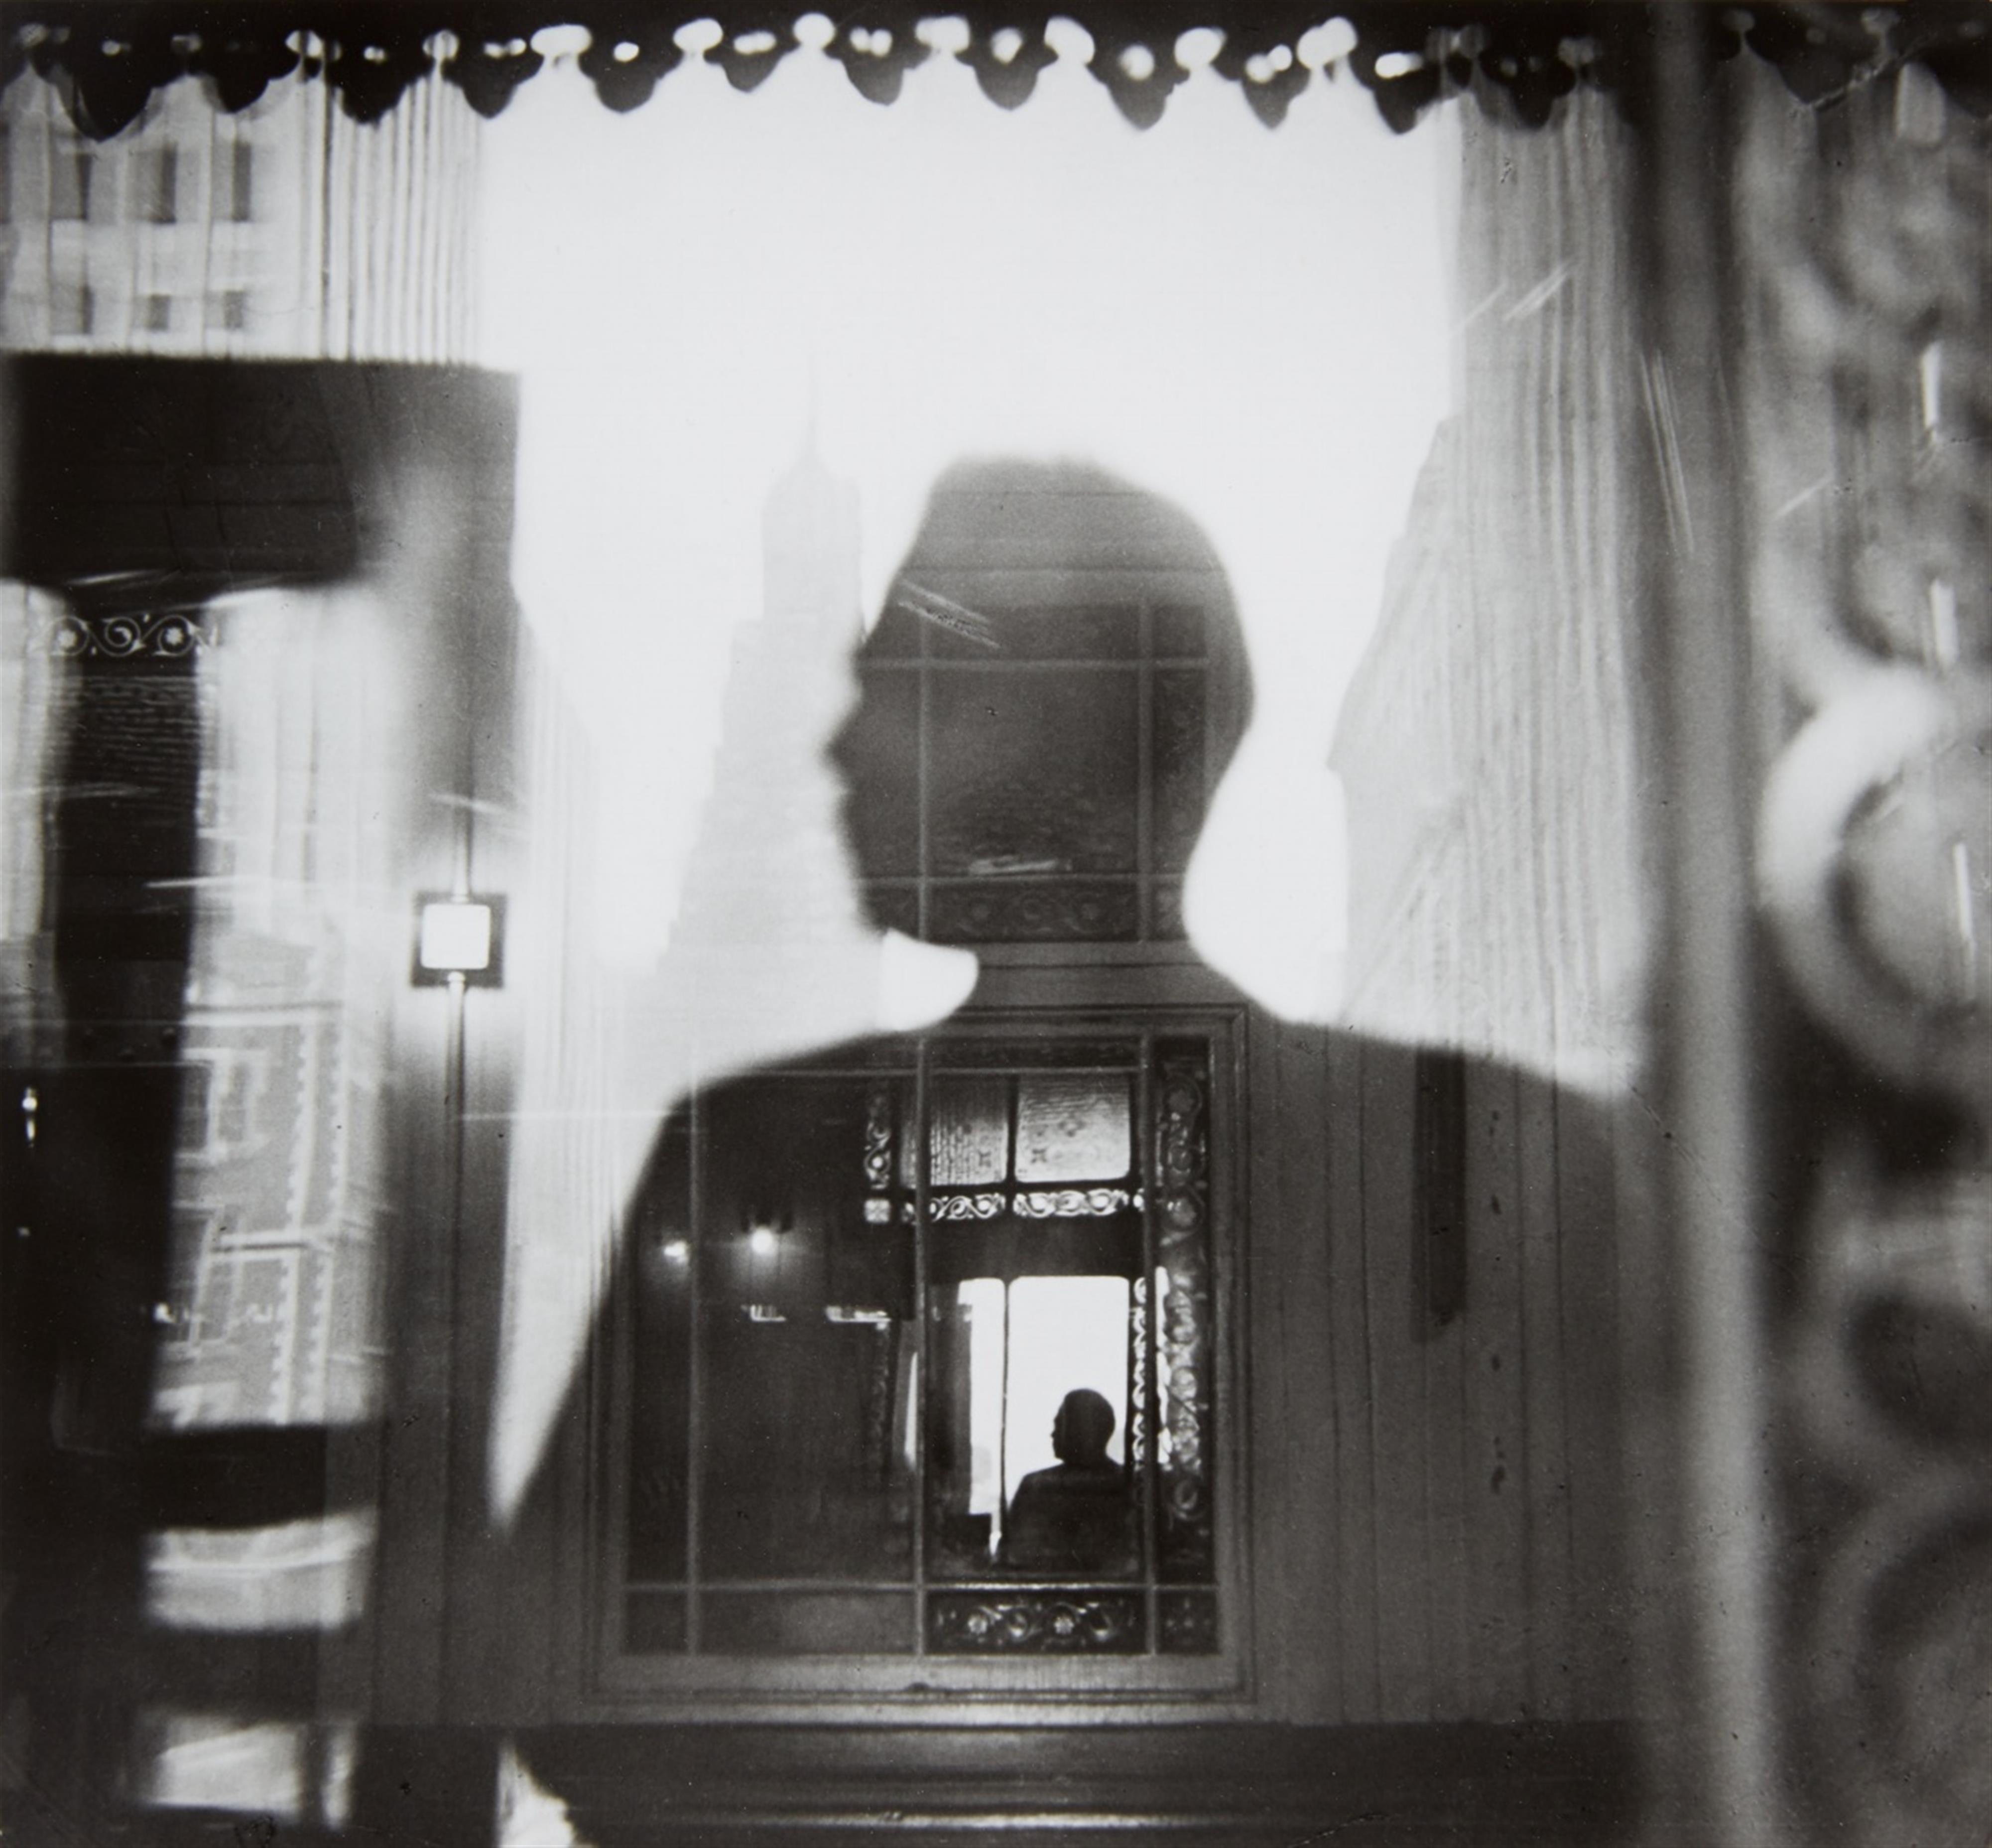 Louis Faurer - Self Portrait, 42nd street EL station looking towards 'Tudor City' - image-1